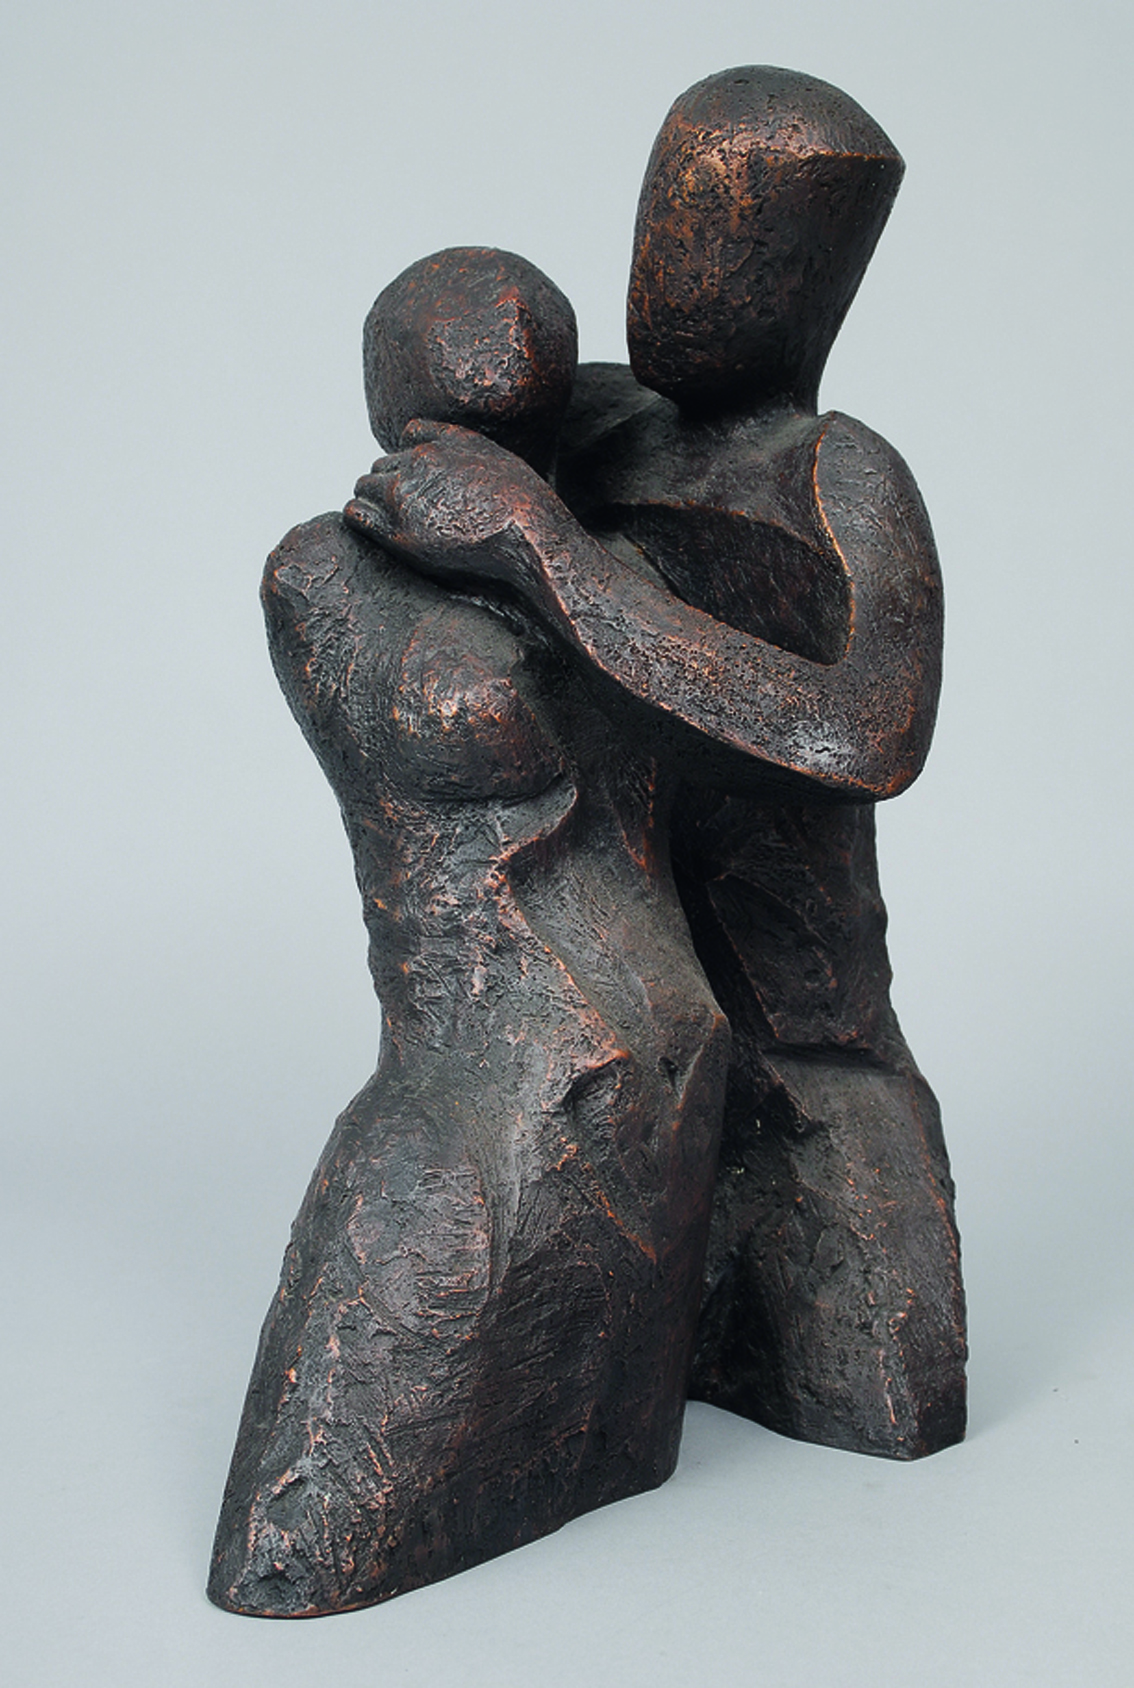 A bronze figure of a loving couple